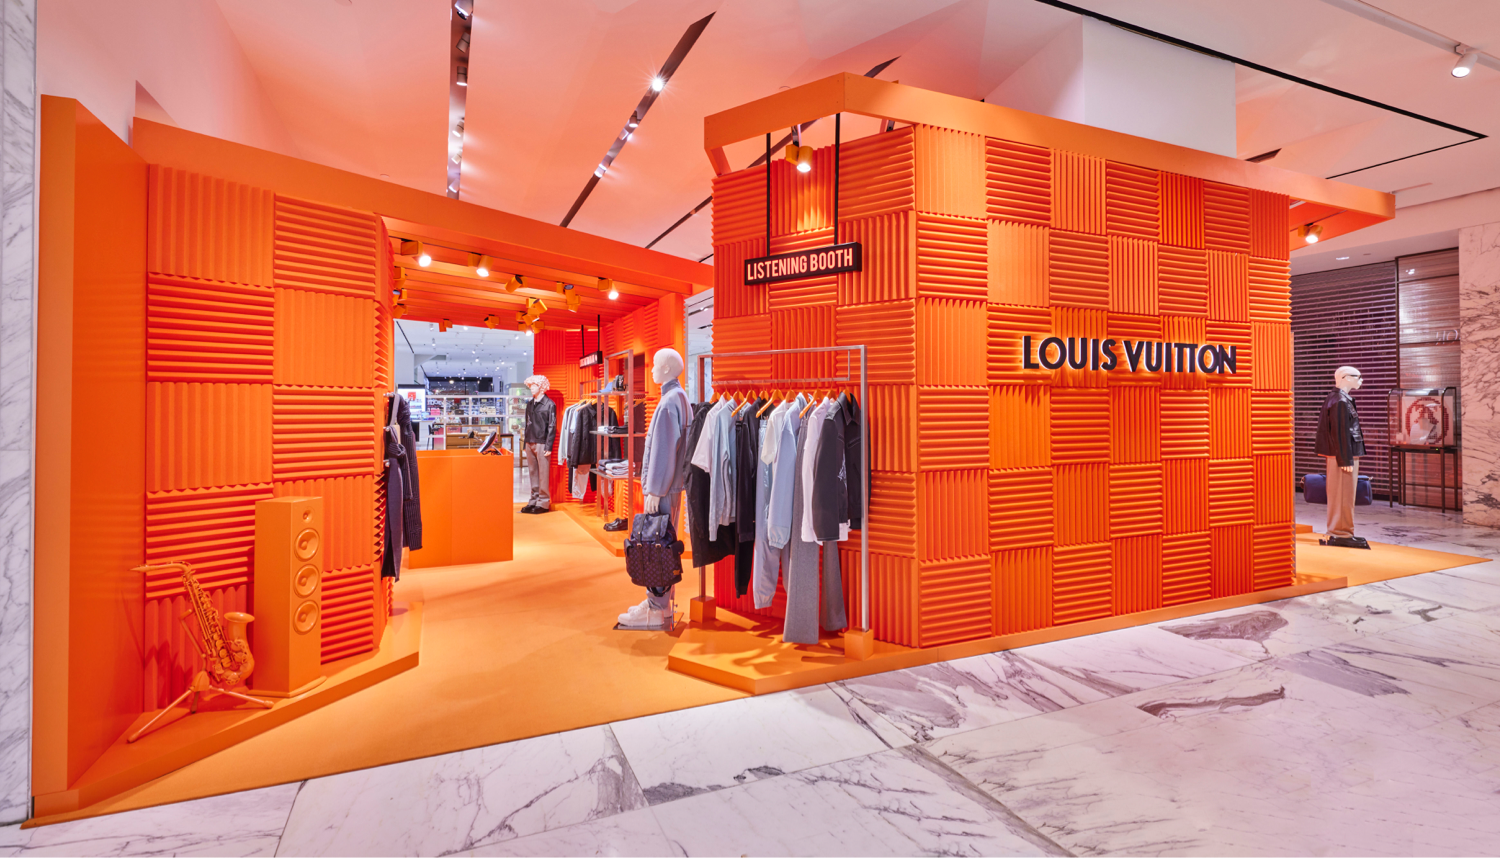 Louis Vuitton in Amsterdam